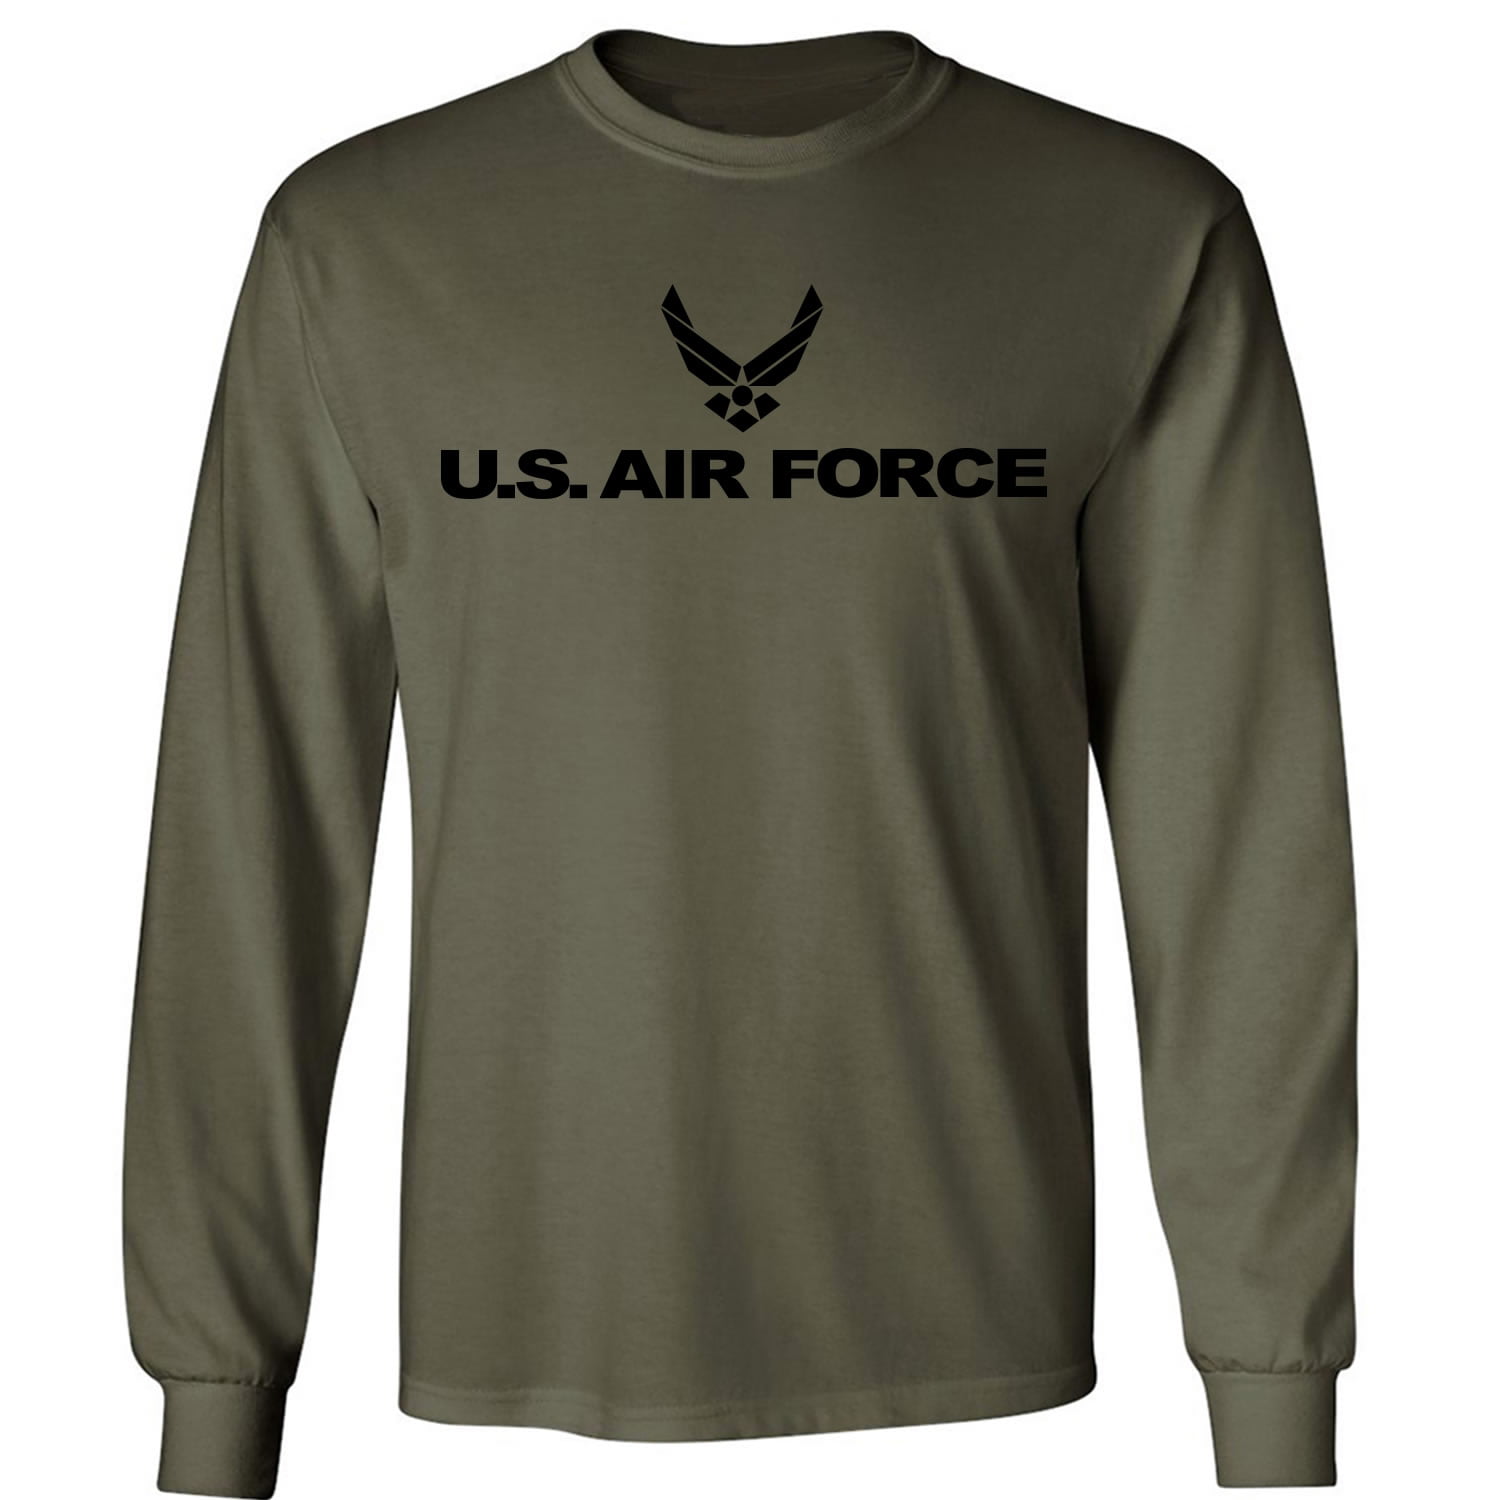 Air Force Long Sleeve T-Shirt in military green - Walmart.com